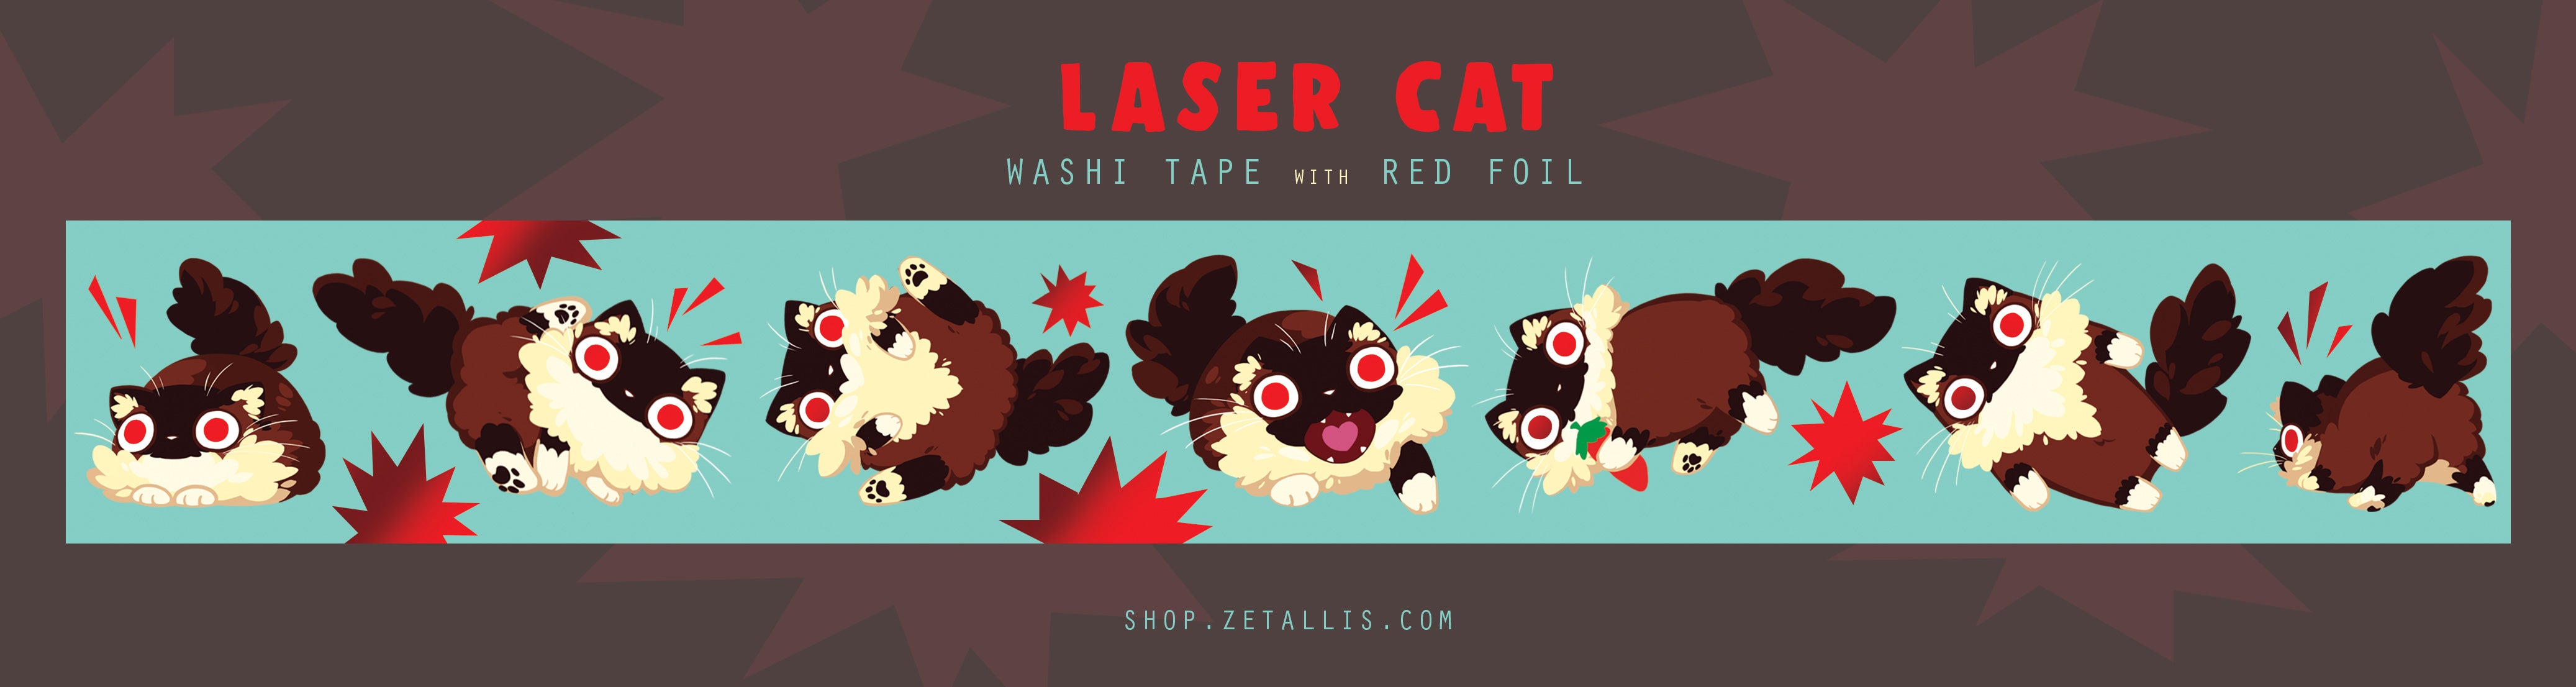 Laser Cat Washi Tape